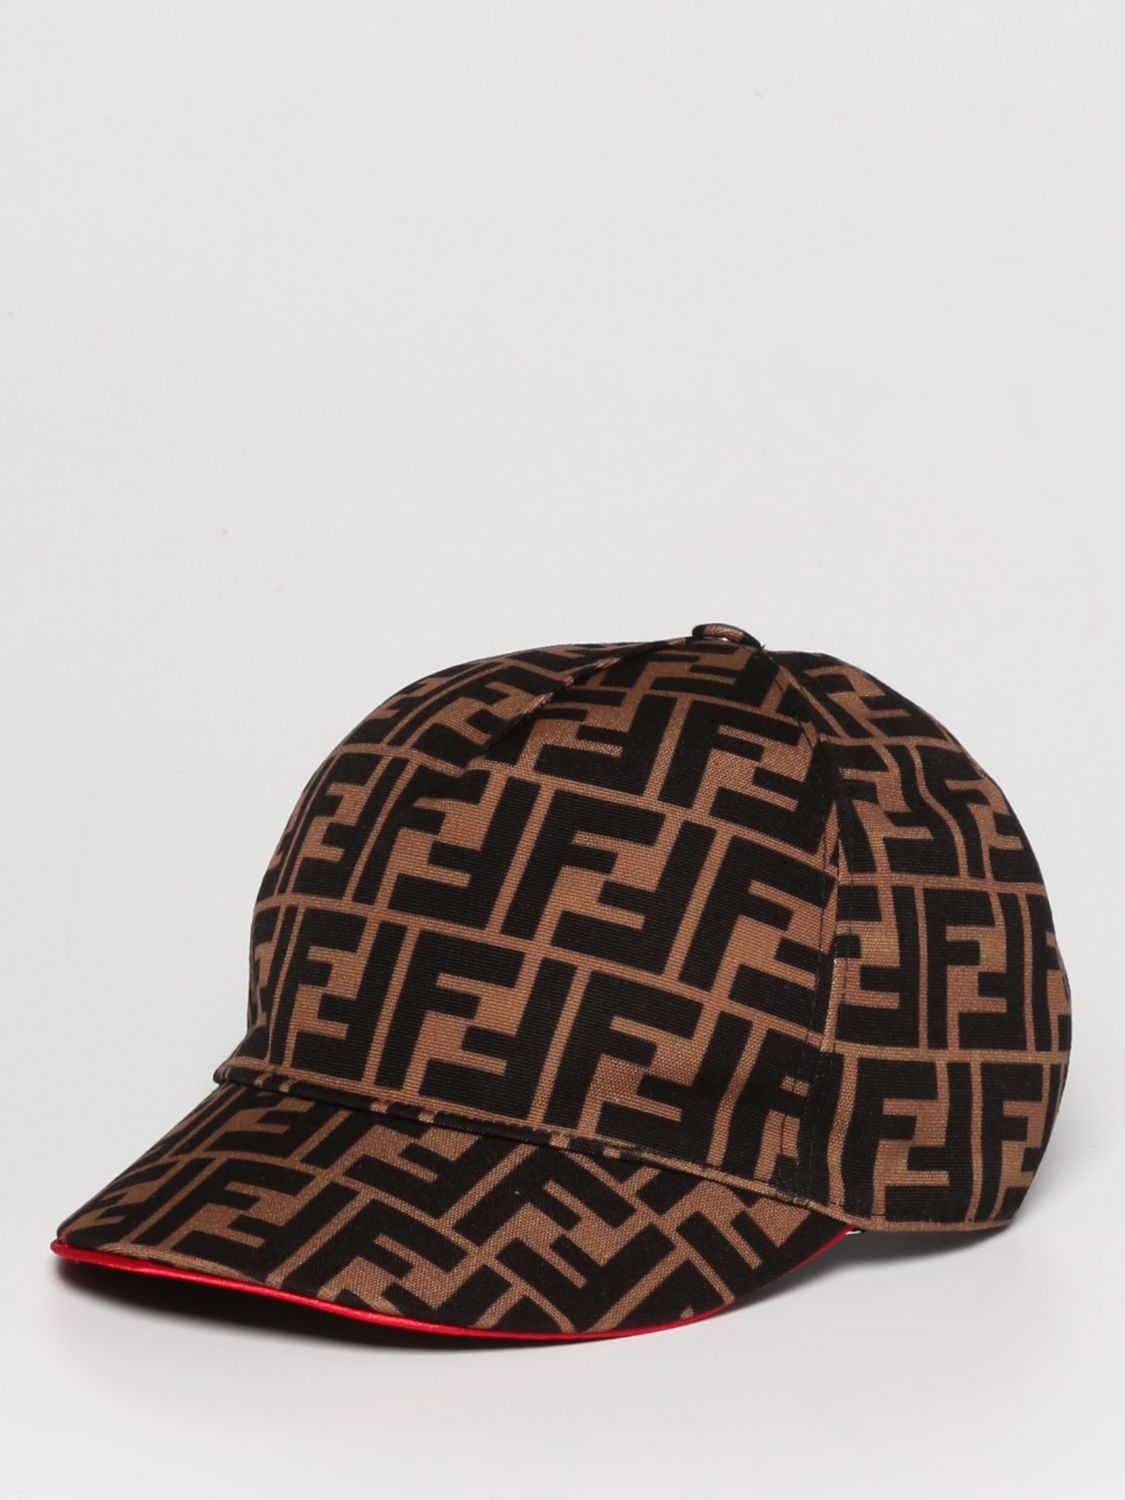 FENDI: hat in cotton - Tobacco | Fendi hat FXQ498A6NR online on GIGLIO.COM